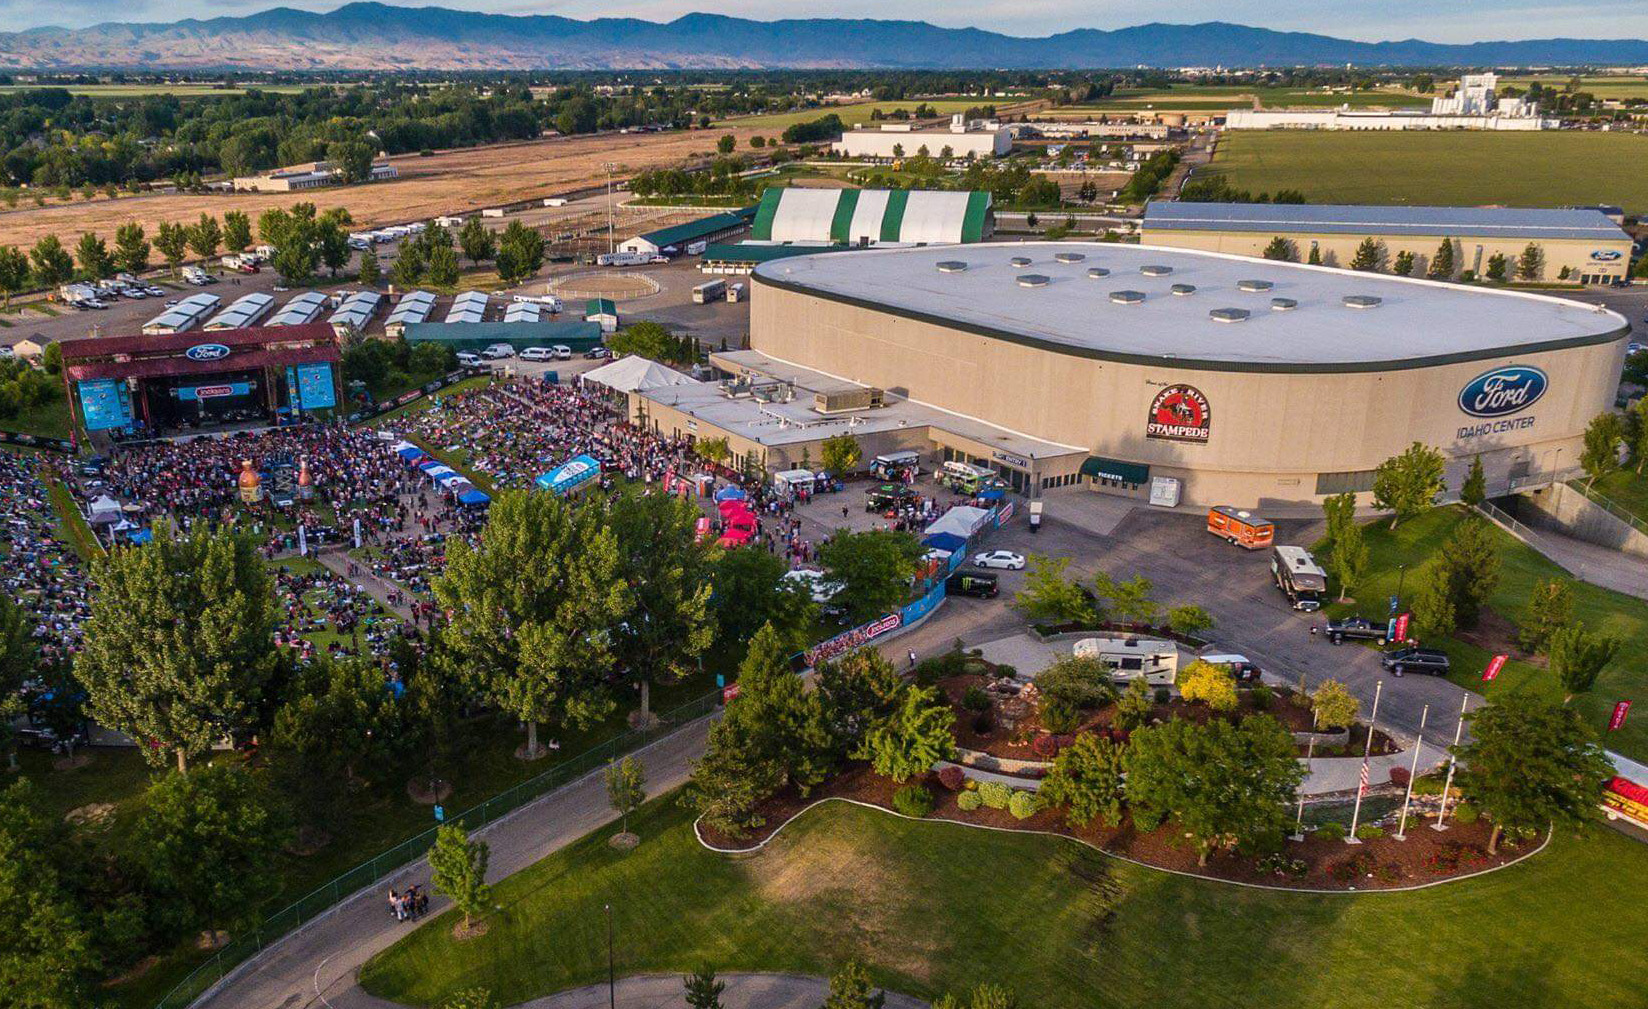 Ford Idaho Center in Nampa, Idaho Arena & Amphitheater Visit Nampa